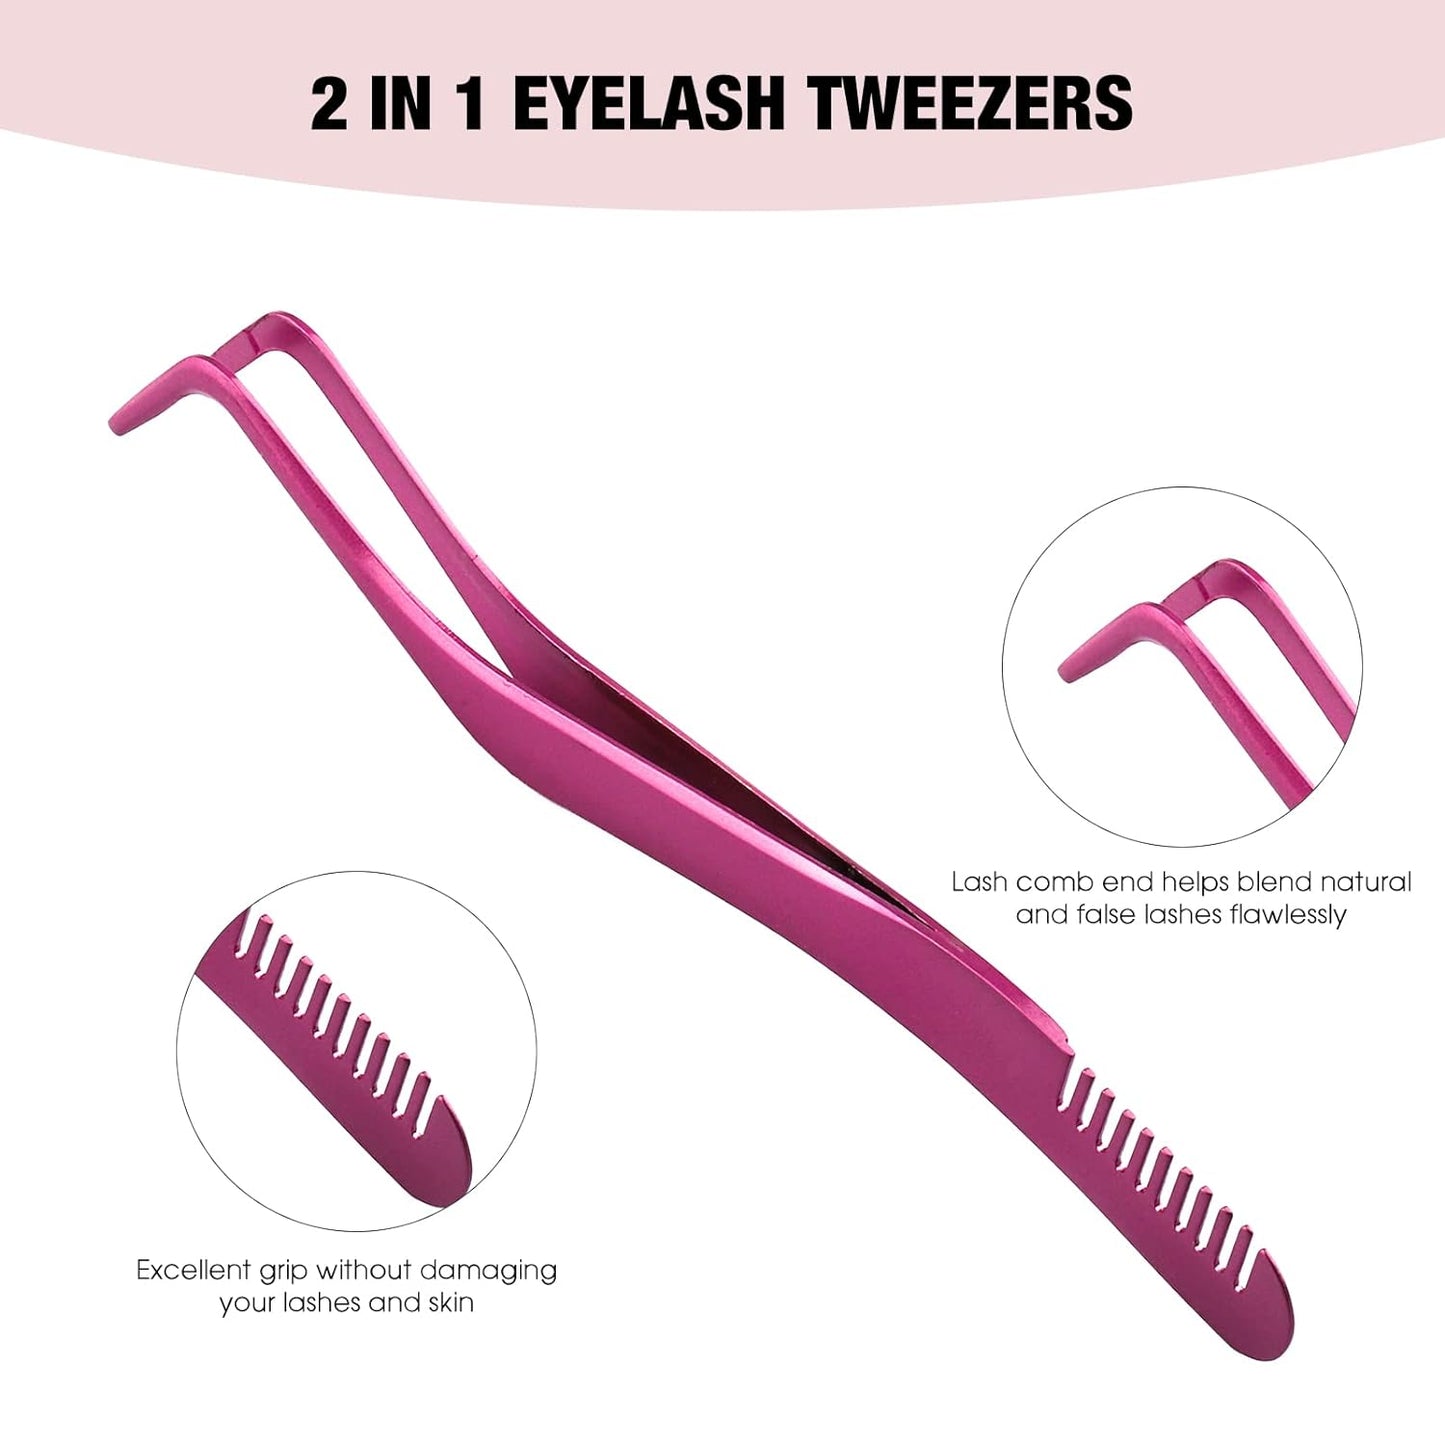 Lash Tweezers Lash Applicator for Individual Lashes DIY Eyelash Extension